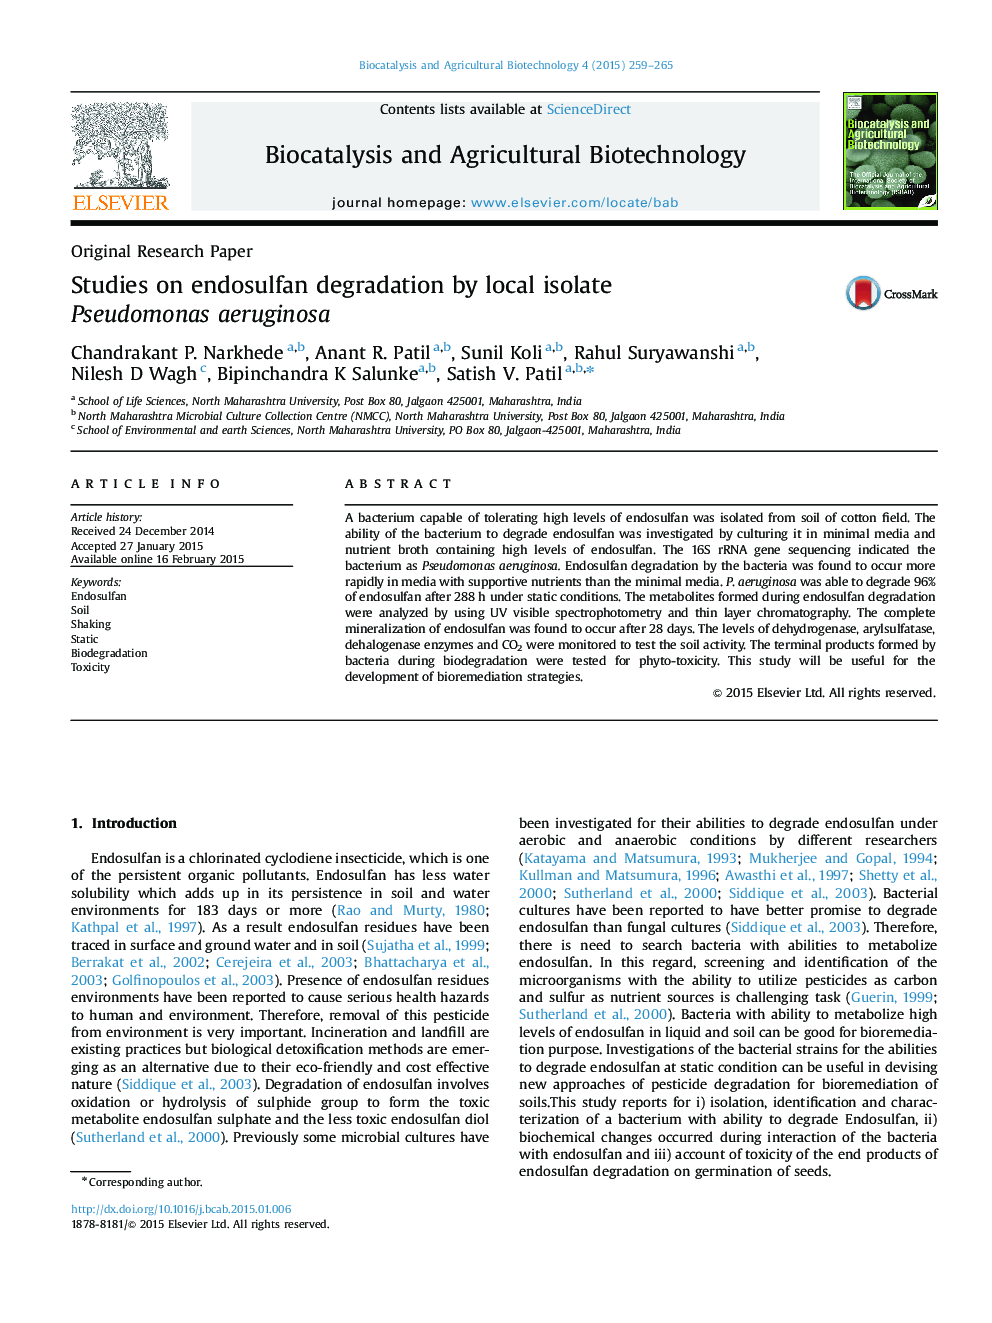 Studies on endosulfan degradation by local isolate Pseudomonas aeruginosa